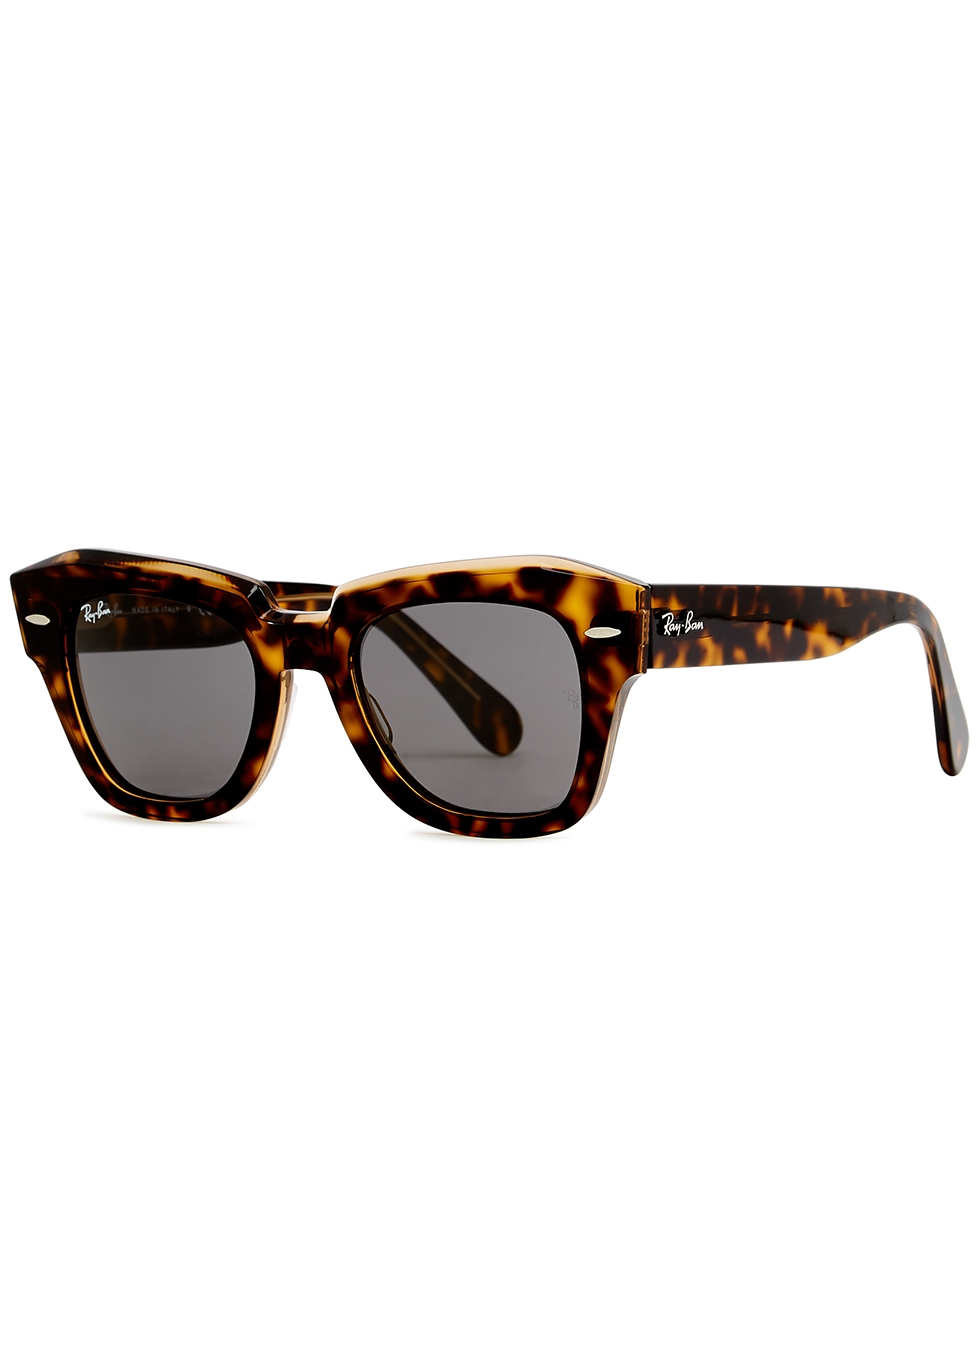 Ray-Ban State Street tortoiseshell wayfarer sunglasses - Harvey Nichols